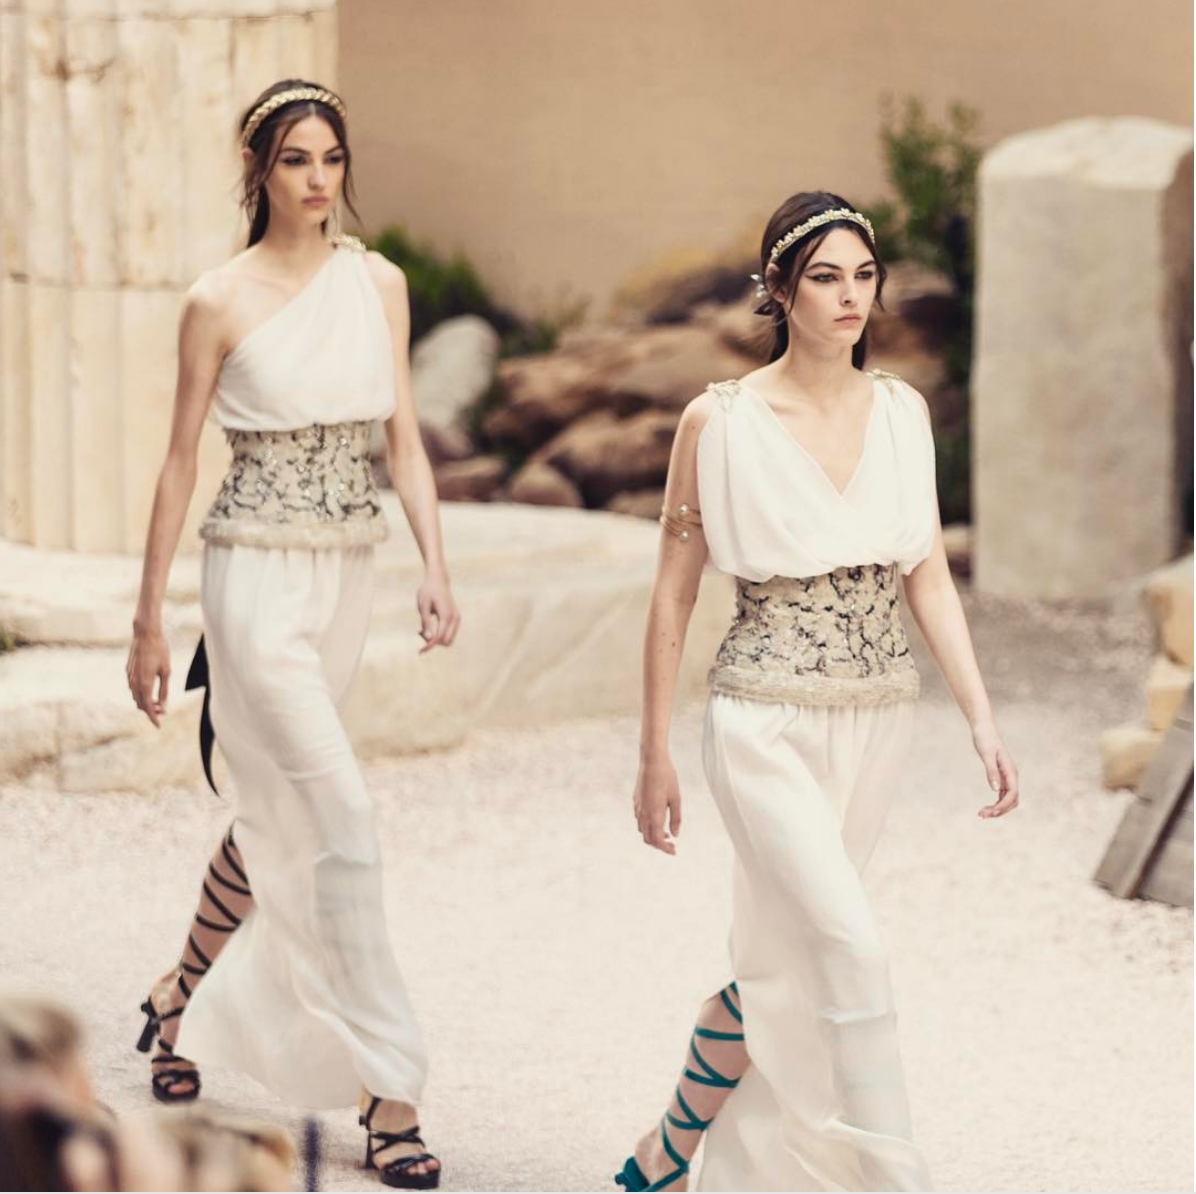 Blog: Walk Like an Egyptian? How Modern Fashion Appropriates Antiquity